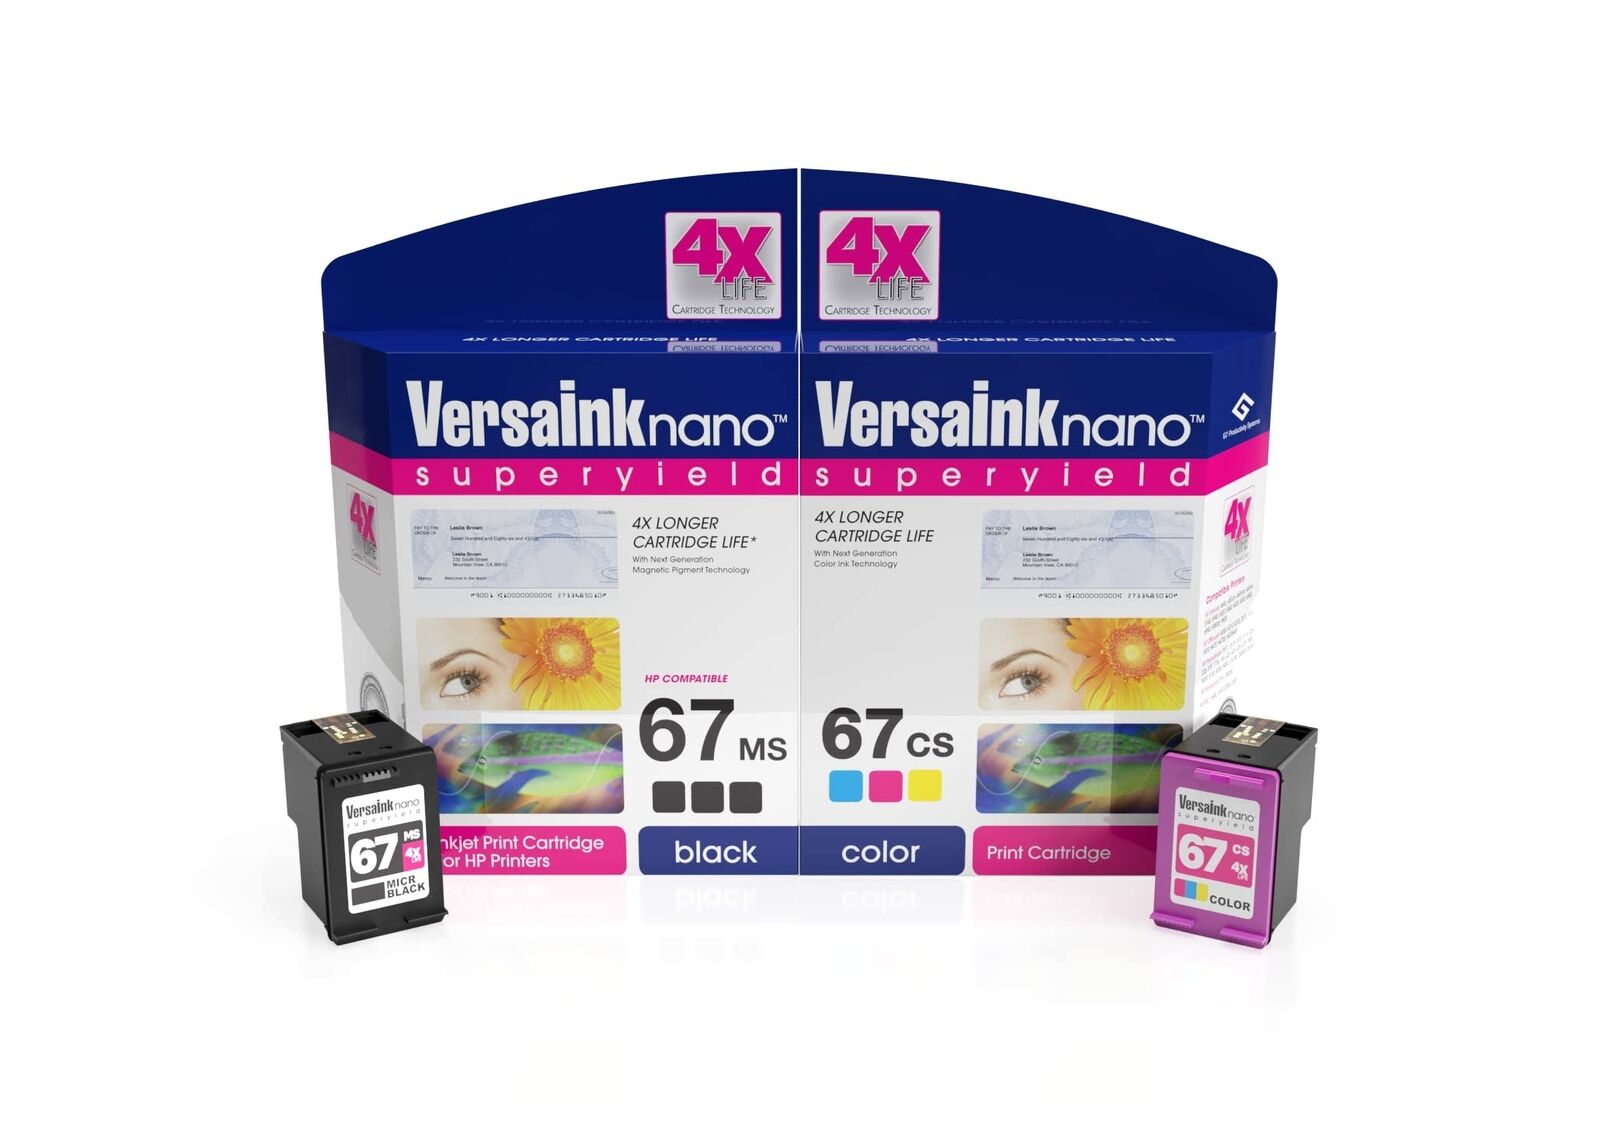 VersaInk-Nano HP 67 MS MICR Black Ink Cartridge for Check Printing Nano 67 CS...